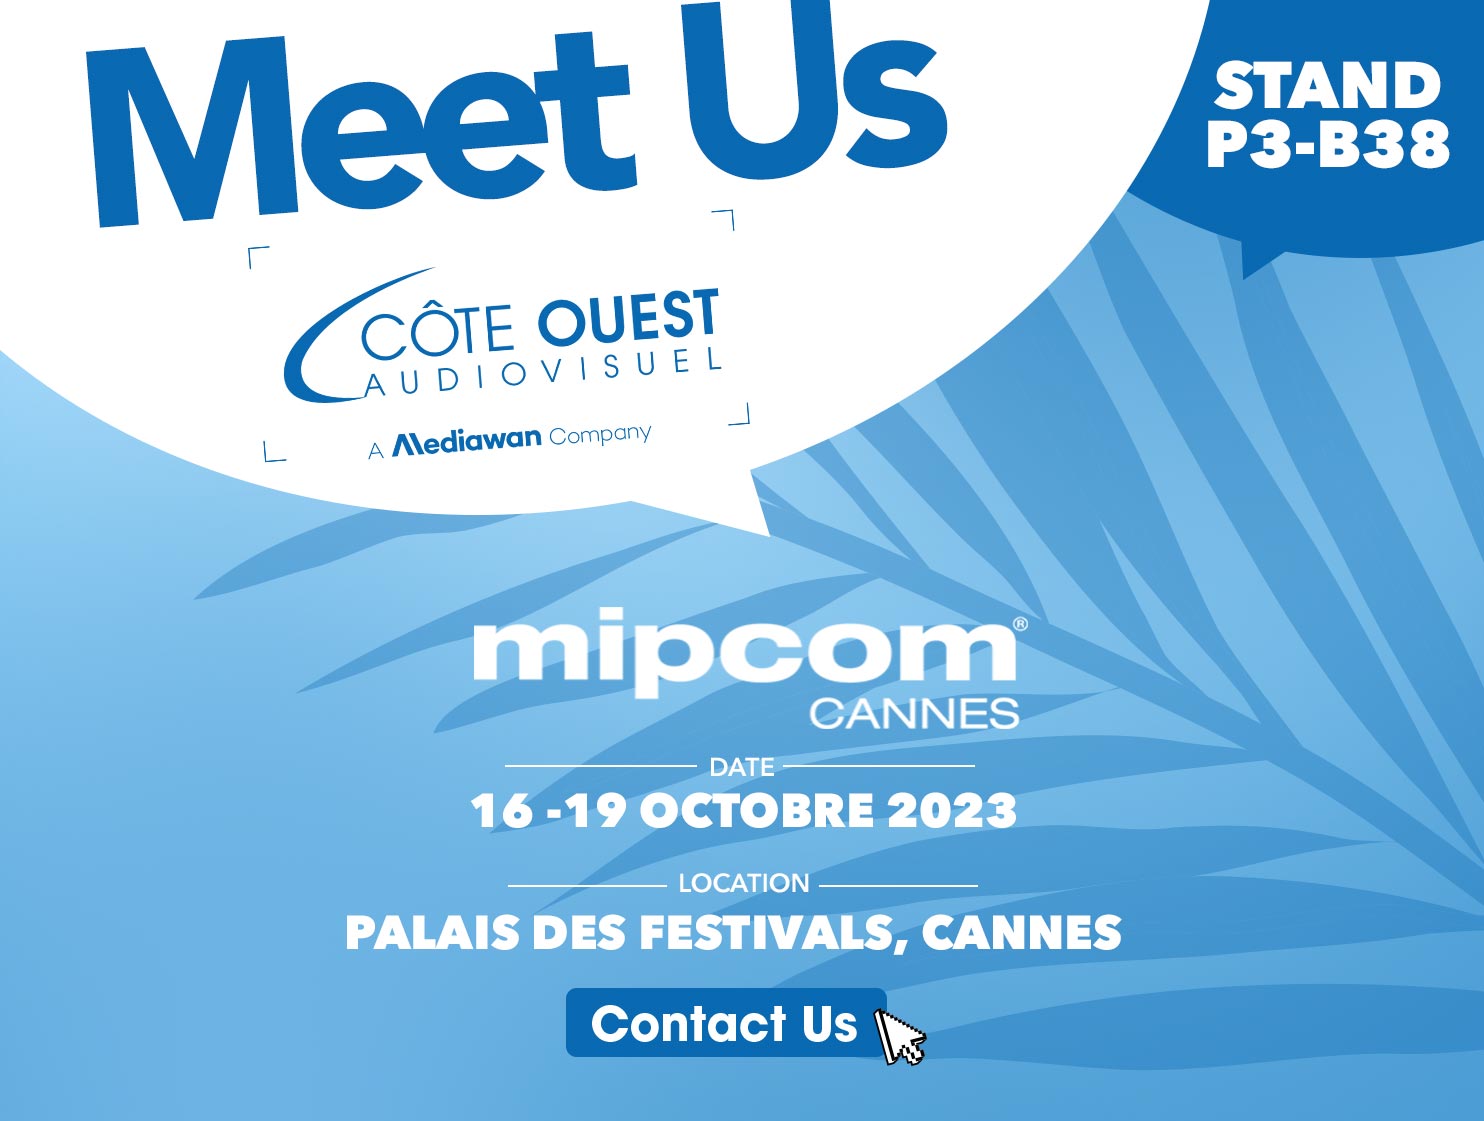 Meet Us Côte Ouest Audiovisuel Mip Africa 16-19 octobre 2023